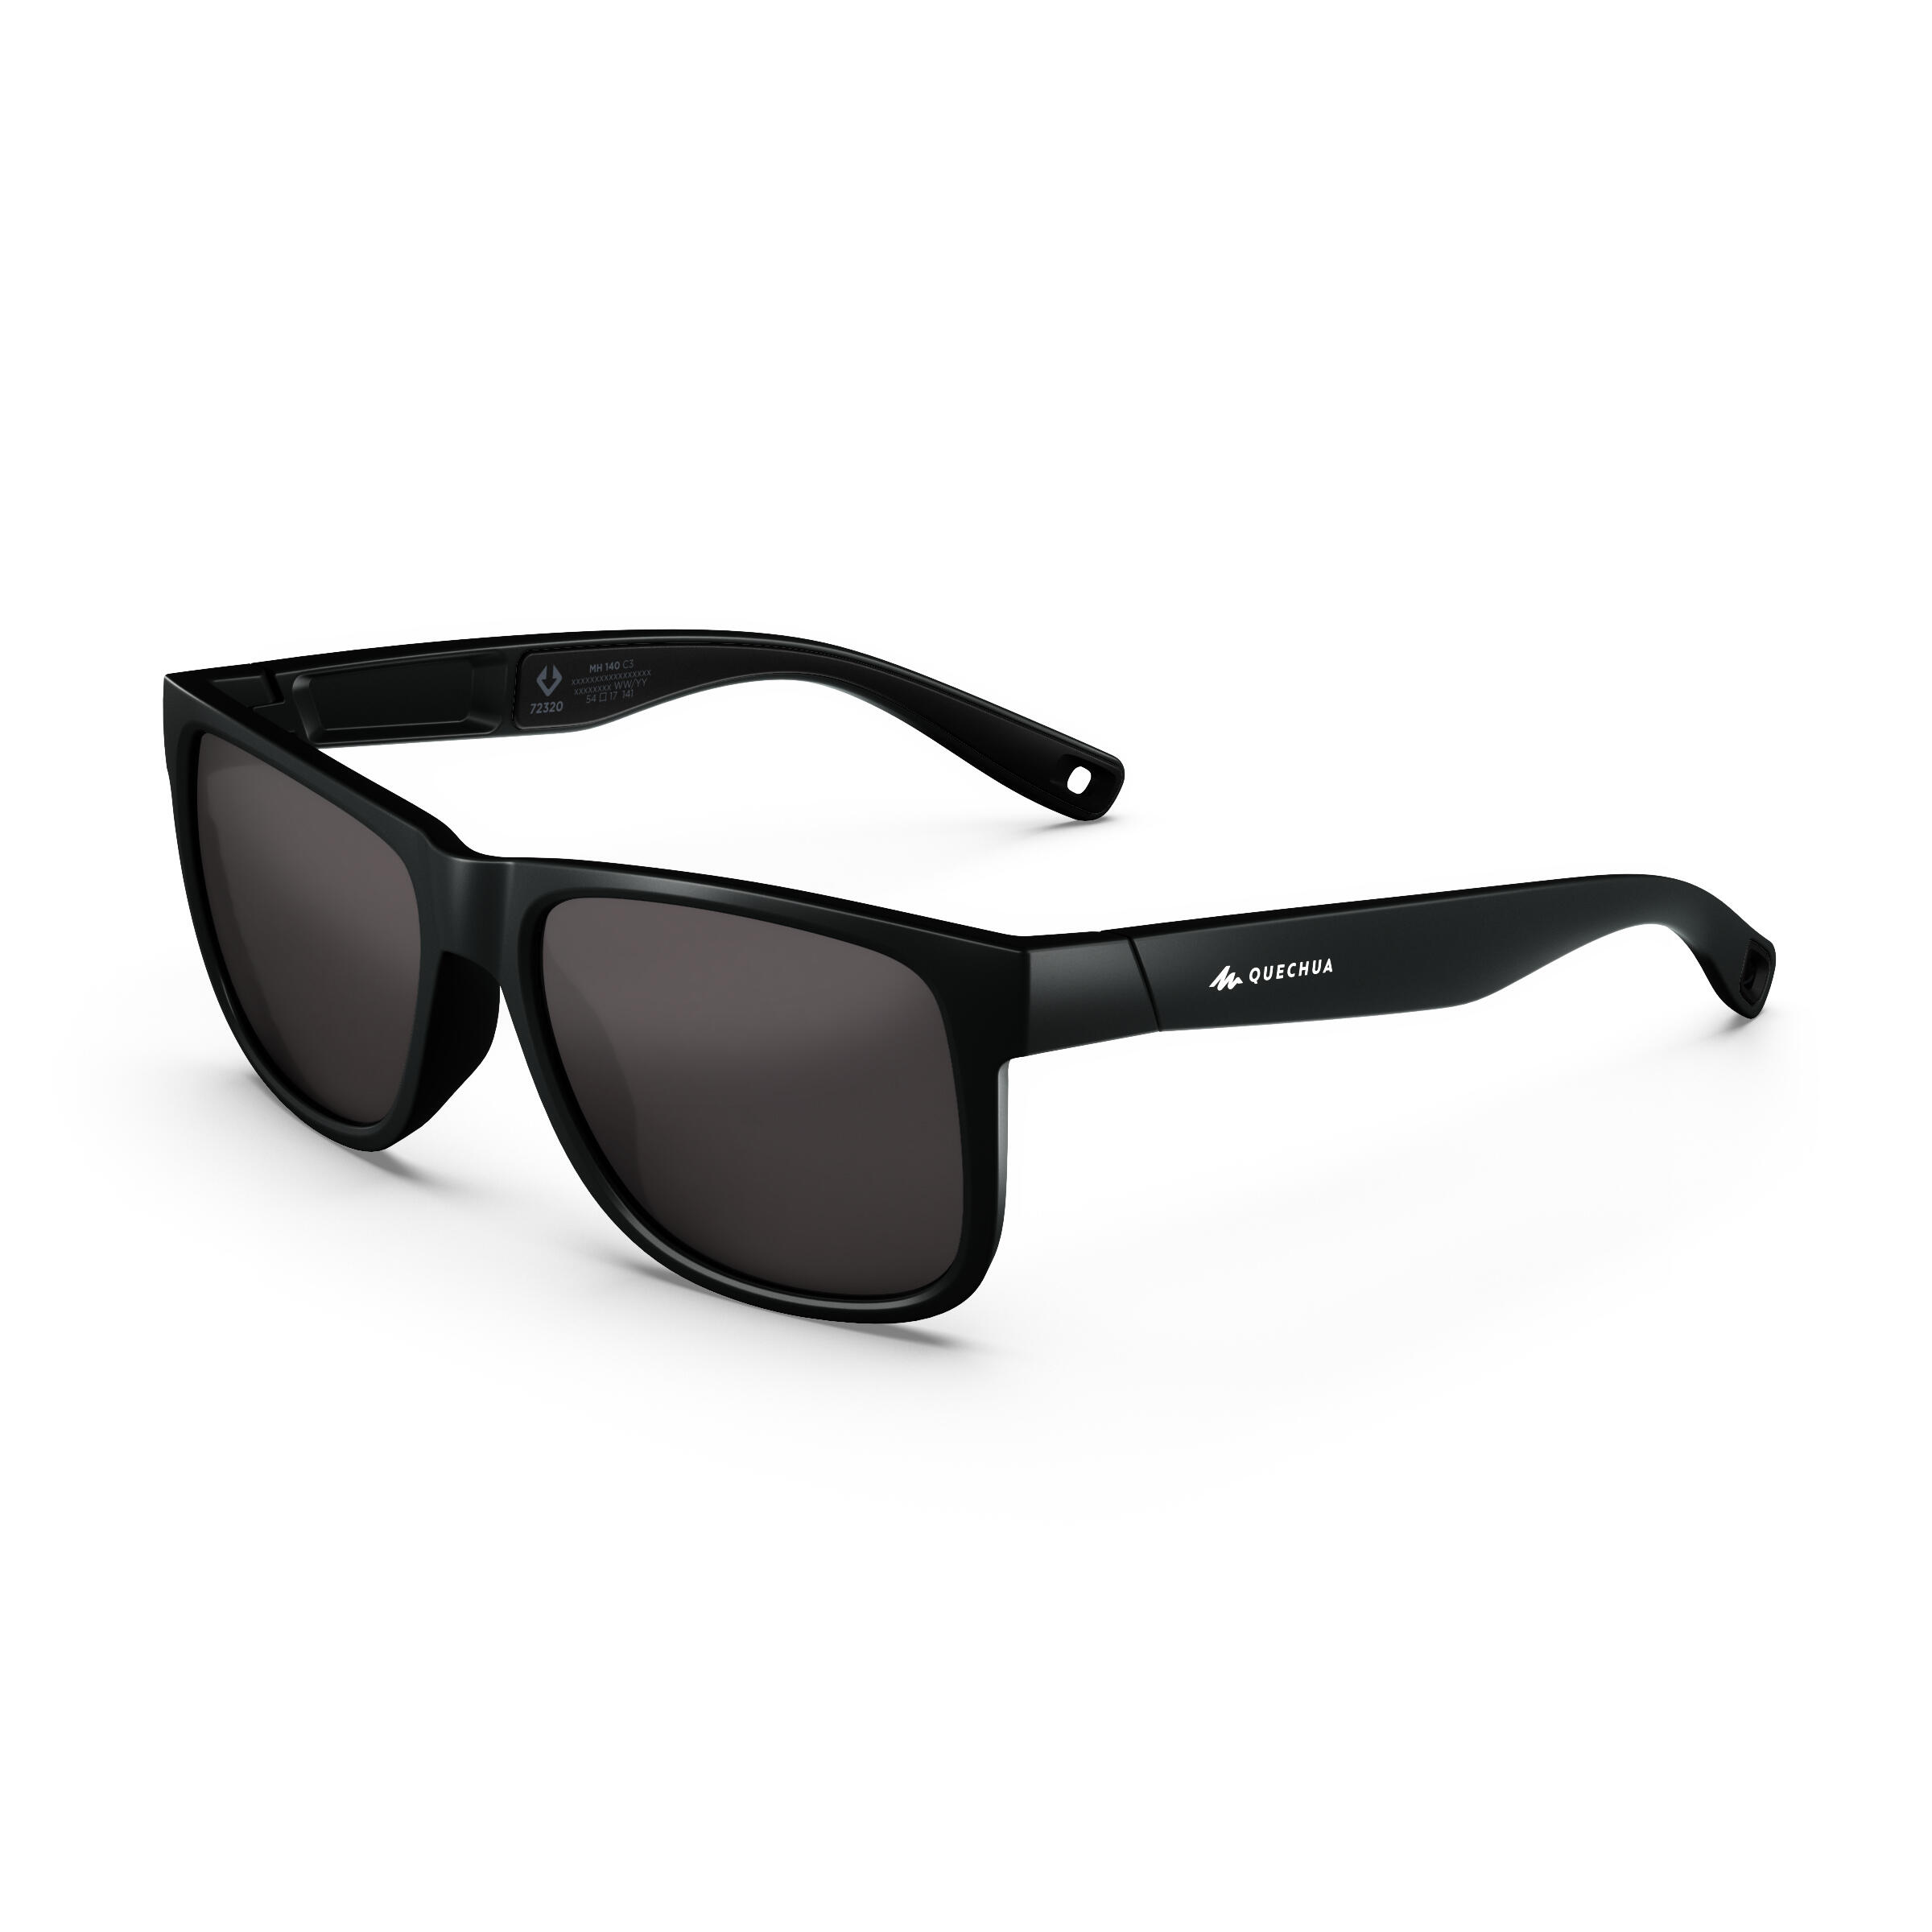 Buy Sunglasses Online, Category 3 UV protection Black